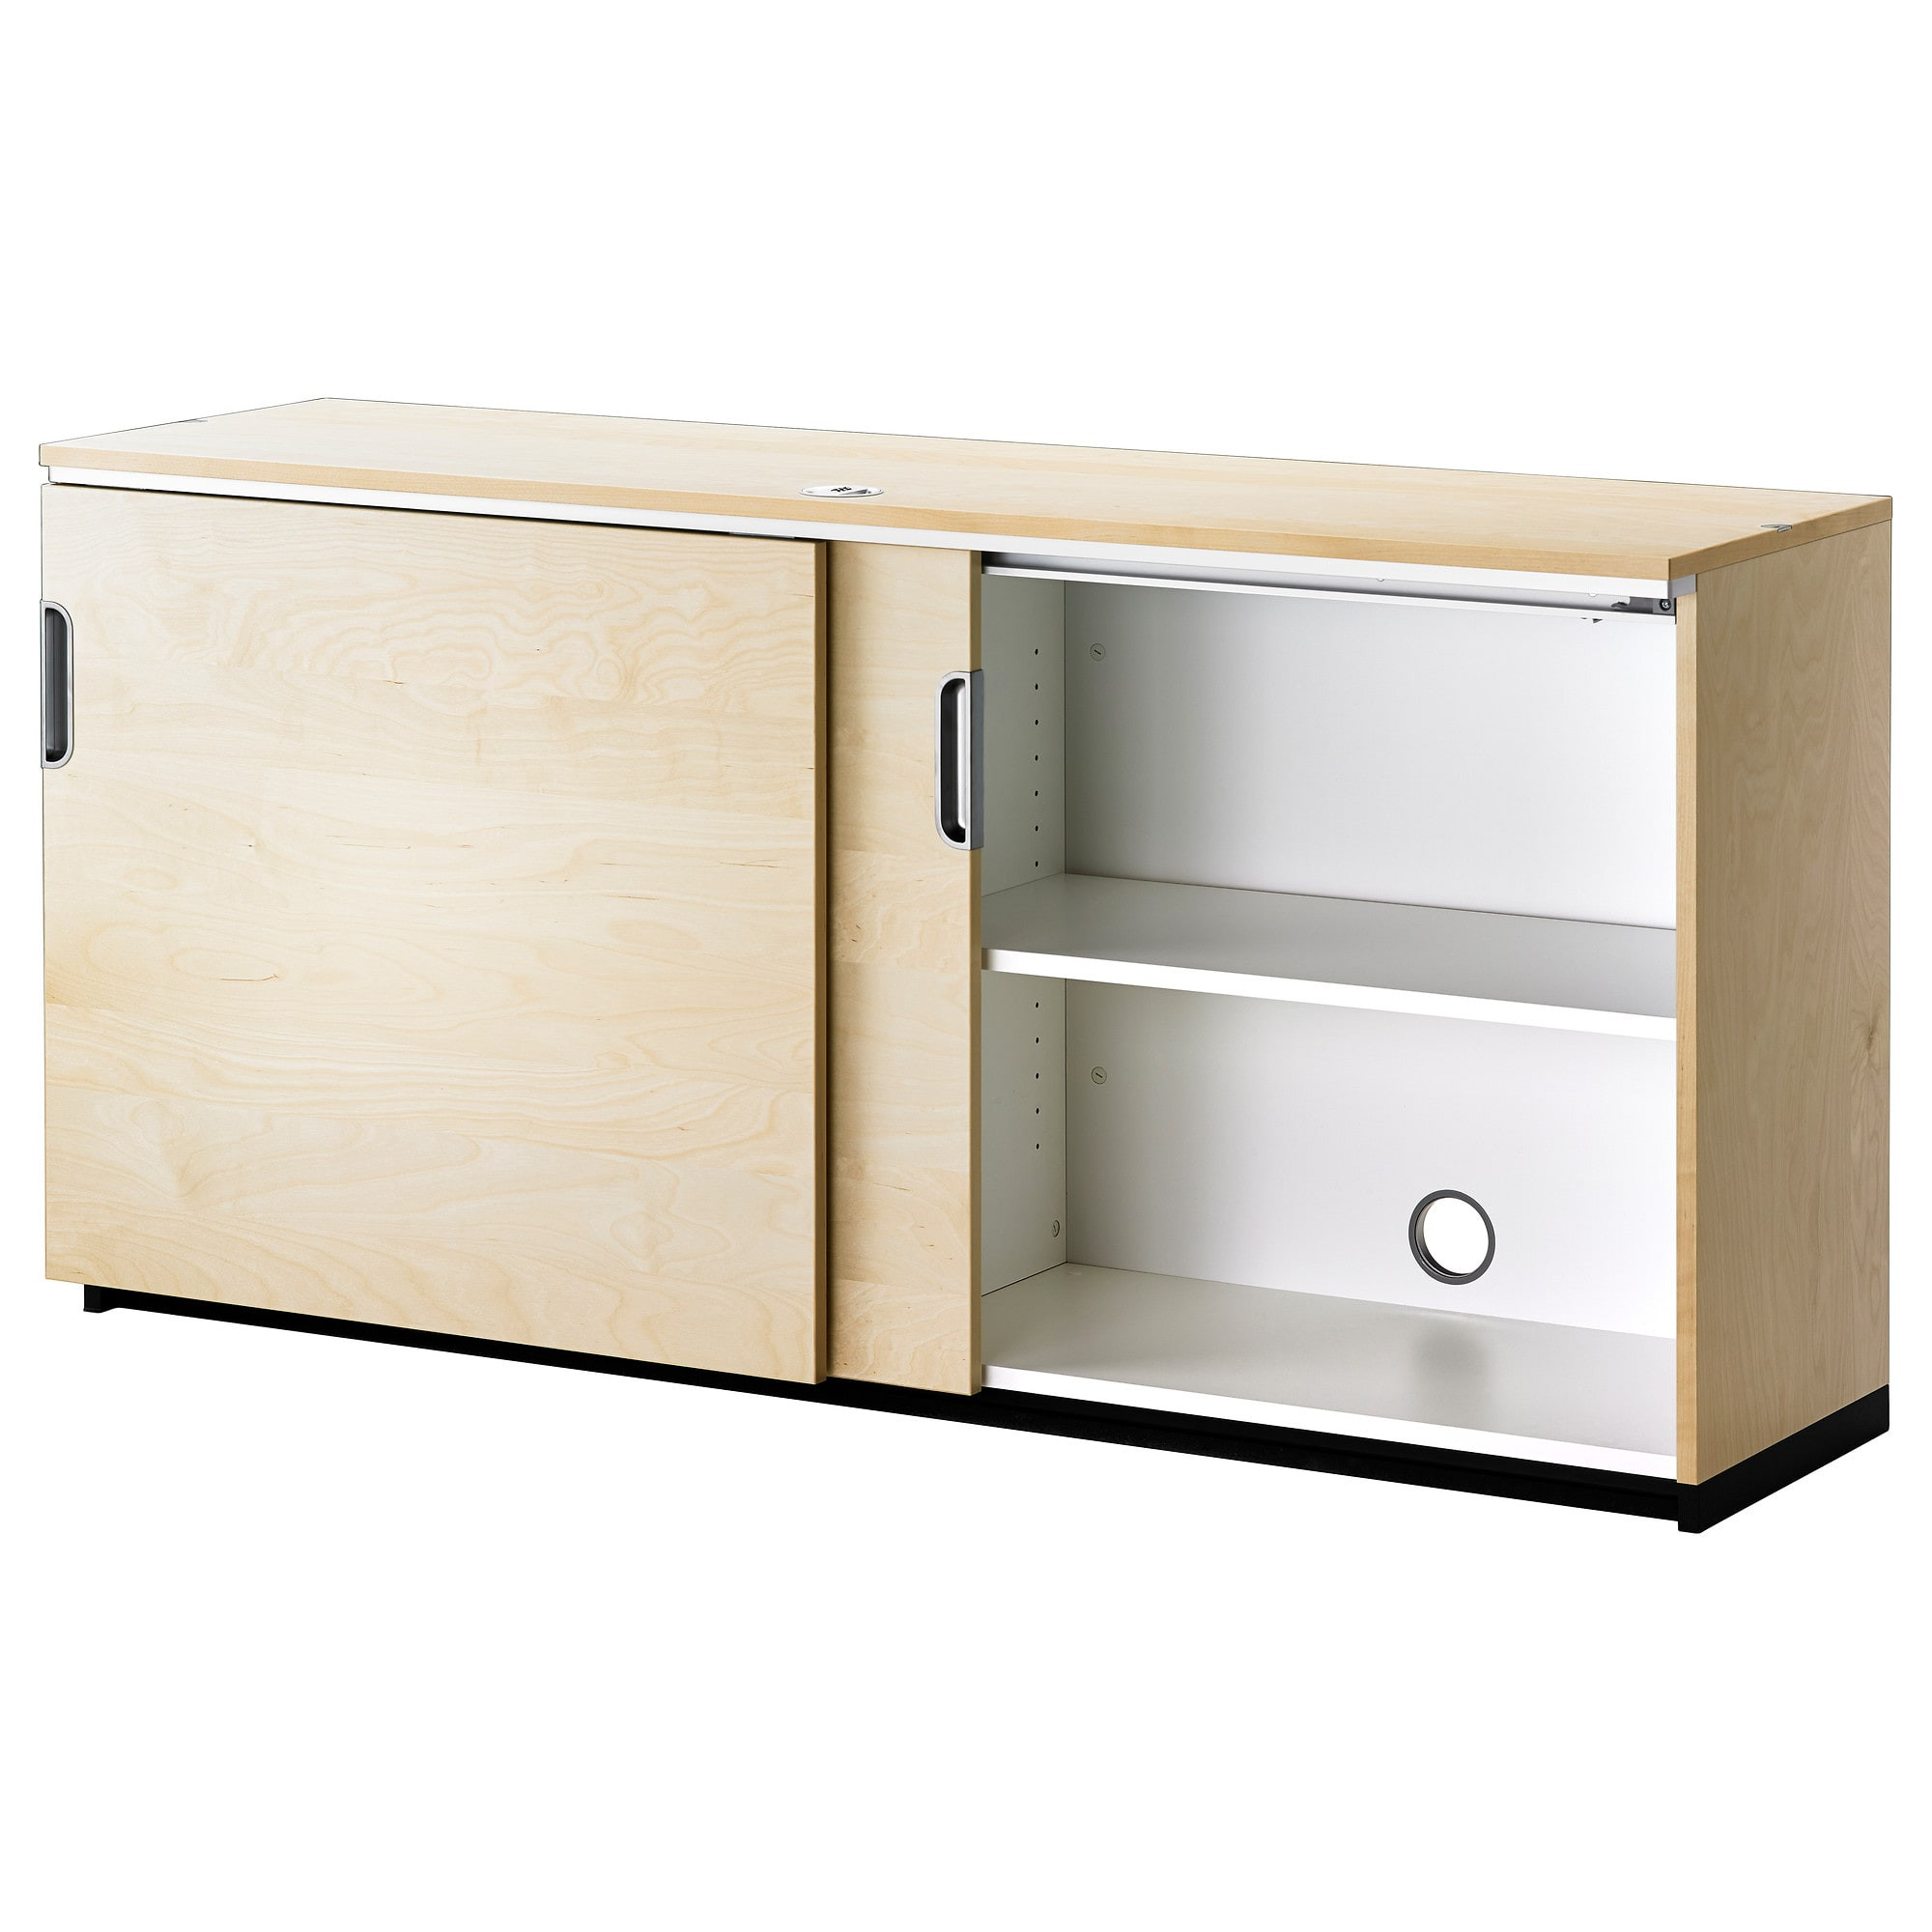 Best ideas about Sliding Doors Storage Cabinet
. Save or Pin GALANT Cabinet with sliding doors Birch veneer 160 x 80 cm Now.